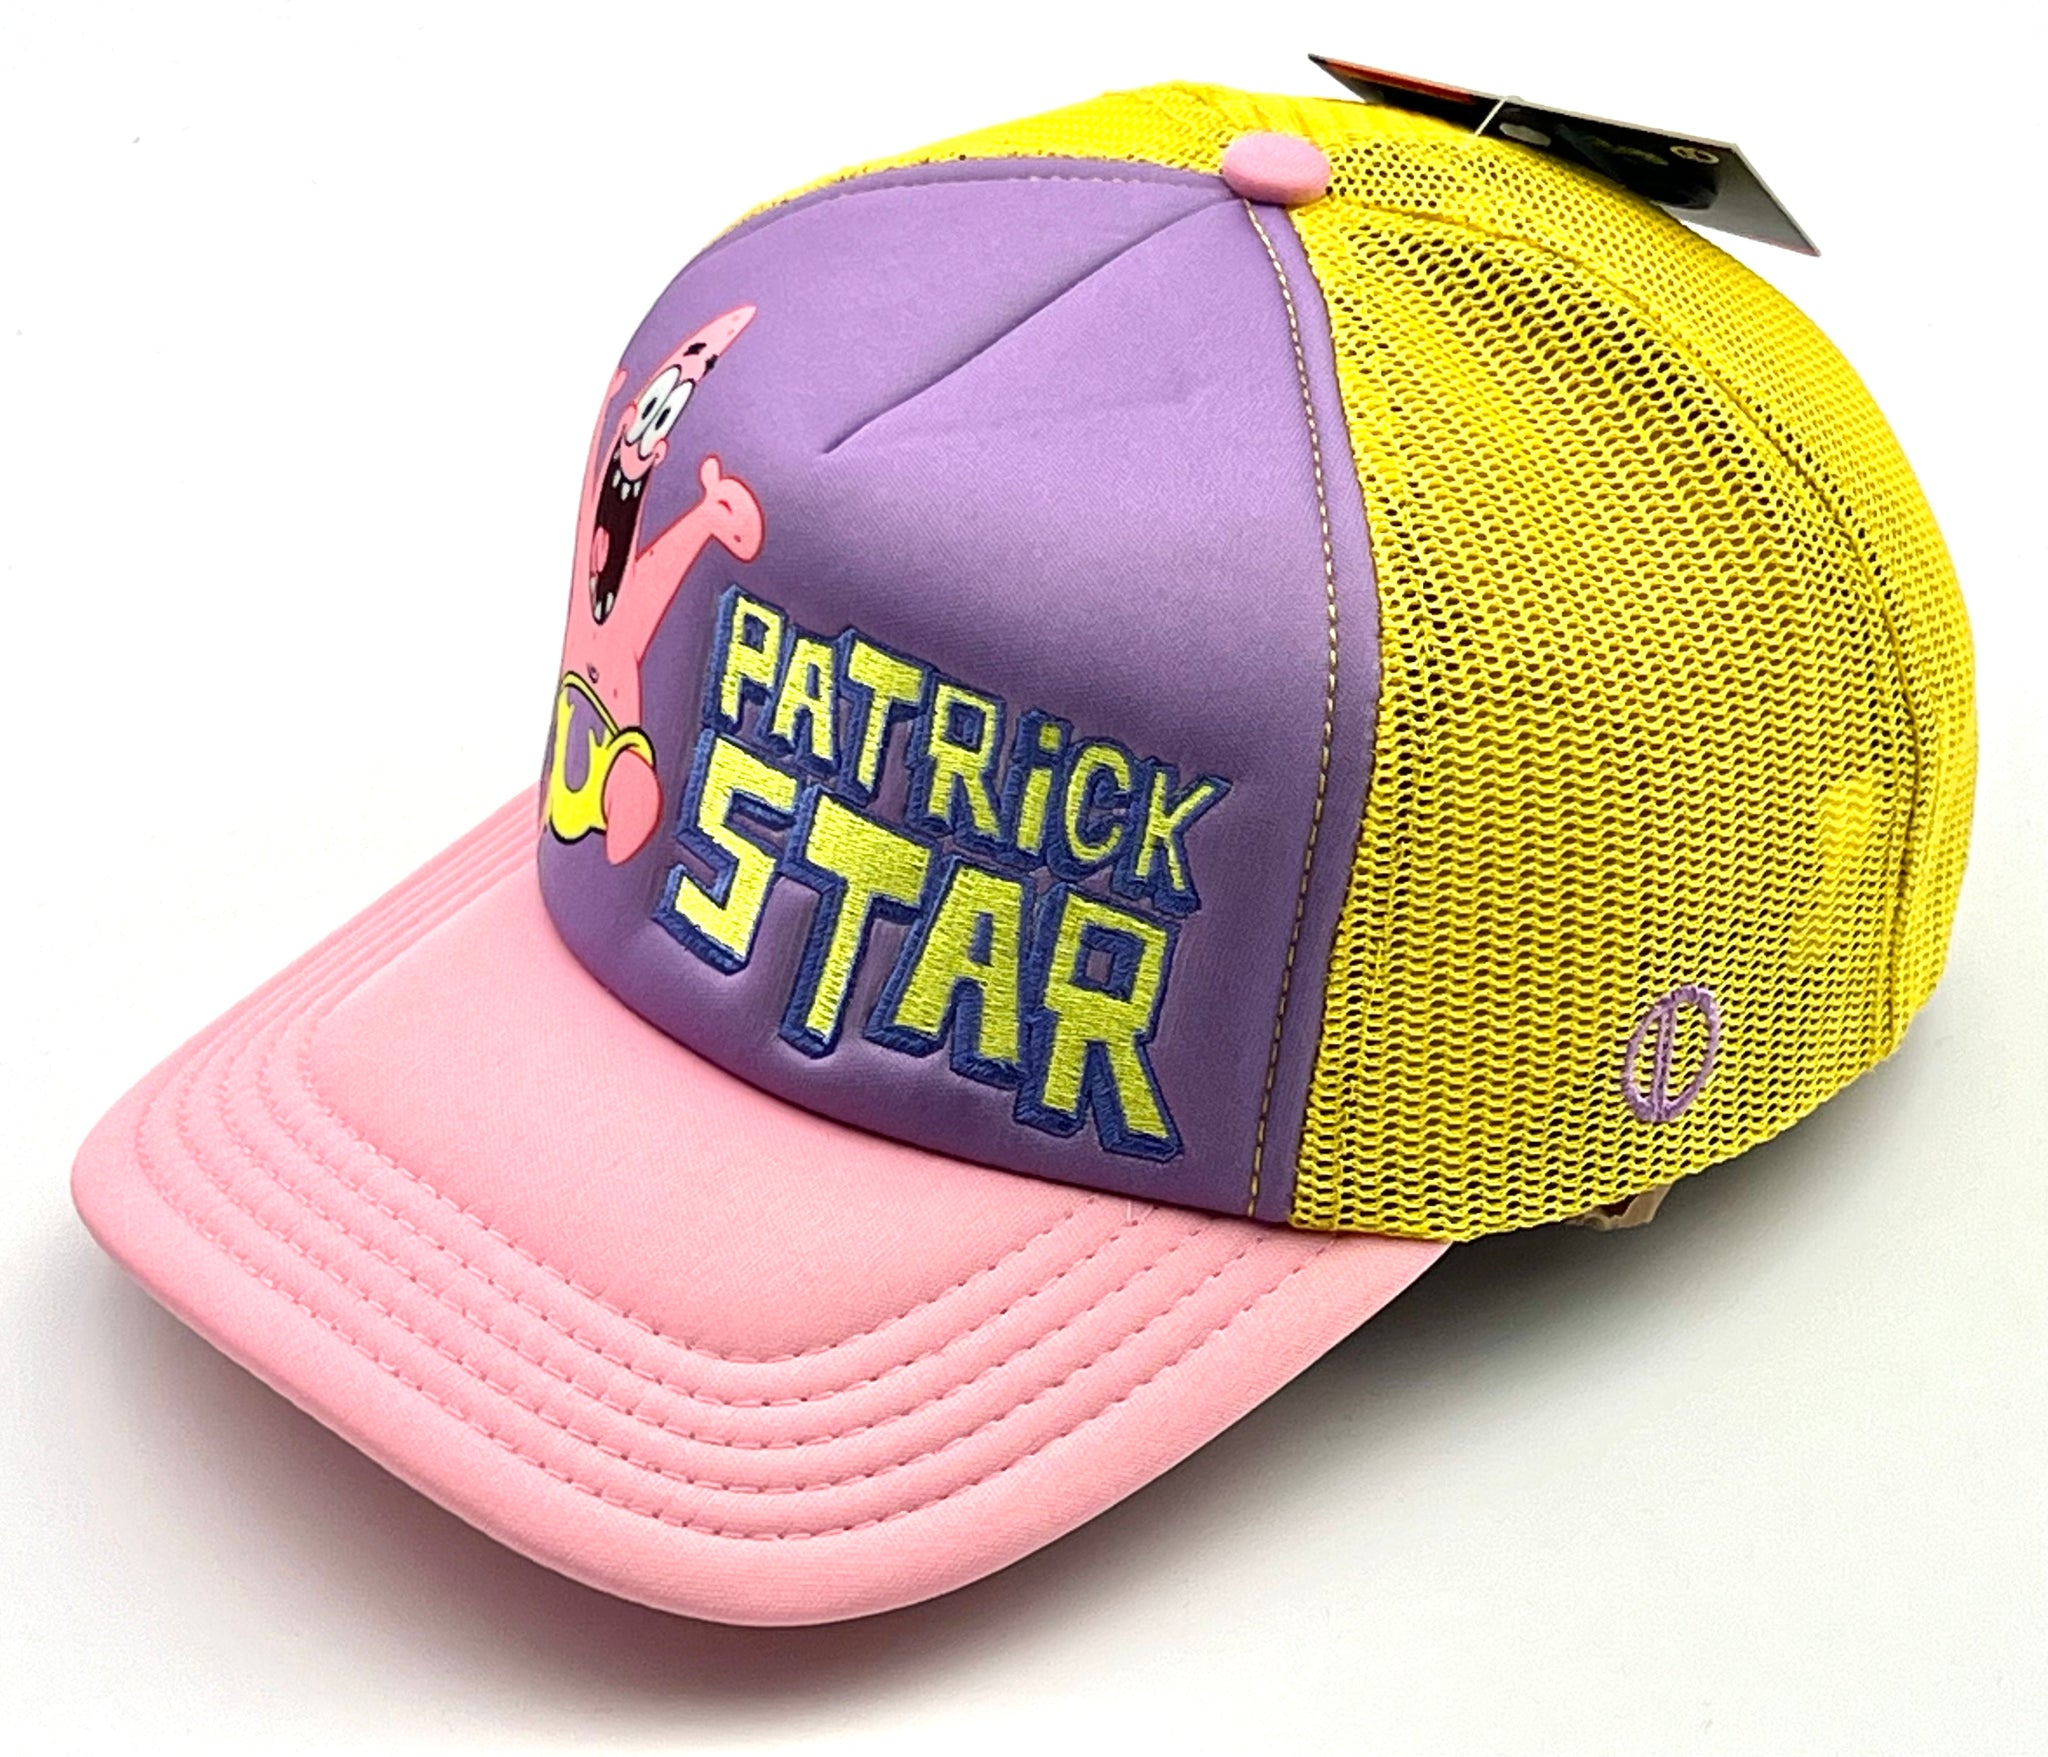 Odd Sox Patrick Star Trucker Cap 35120-TH